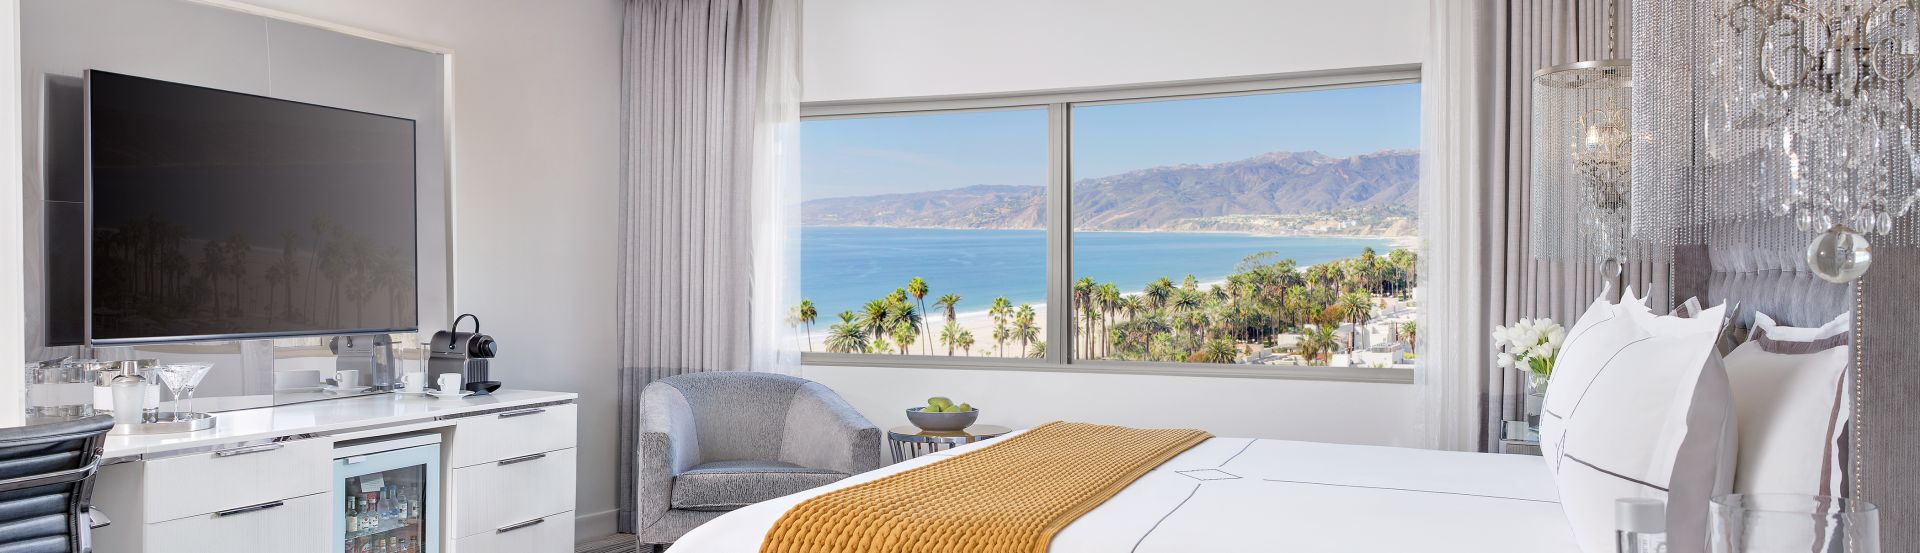 PREMIER ROOMS Premier Hotel Rooms on Santa Monica Beach with Ocean Views 